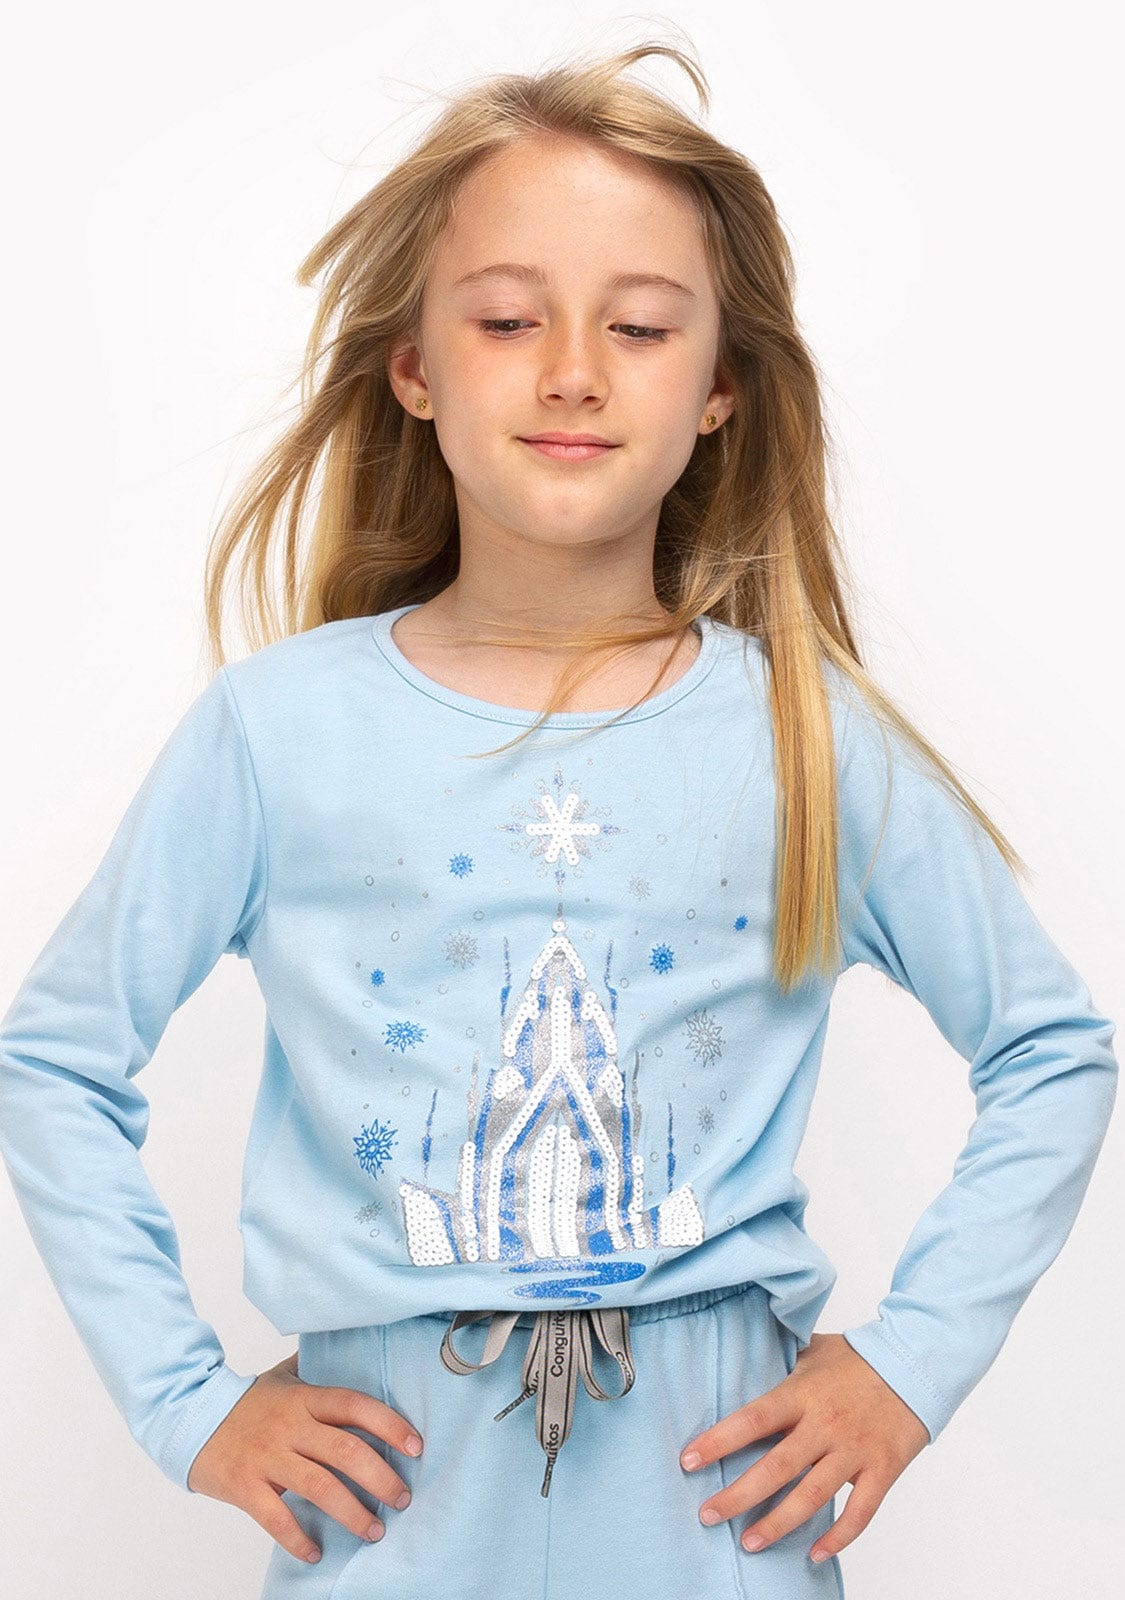 CONGUITOS TEXTIL Clothing Girl's Fantasy Bluish Shirt